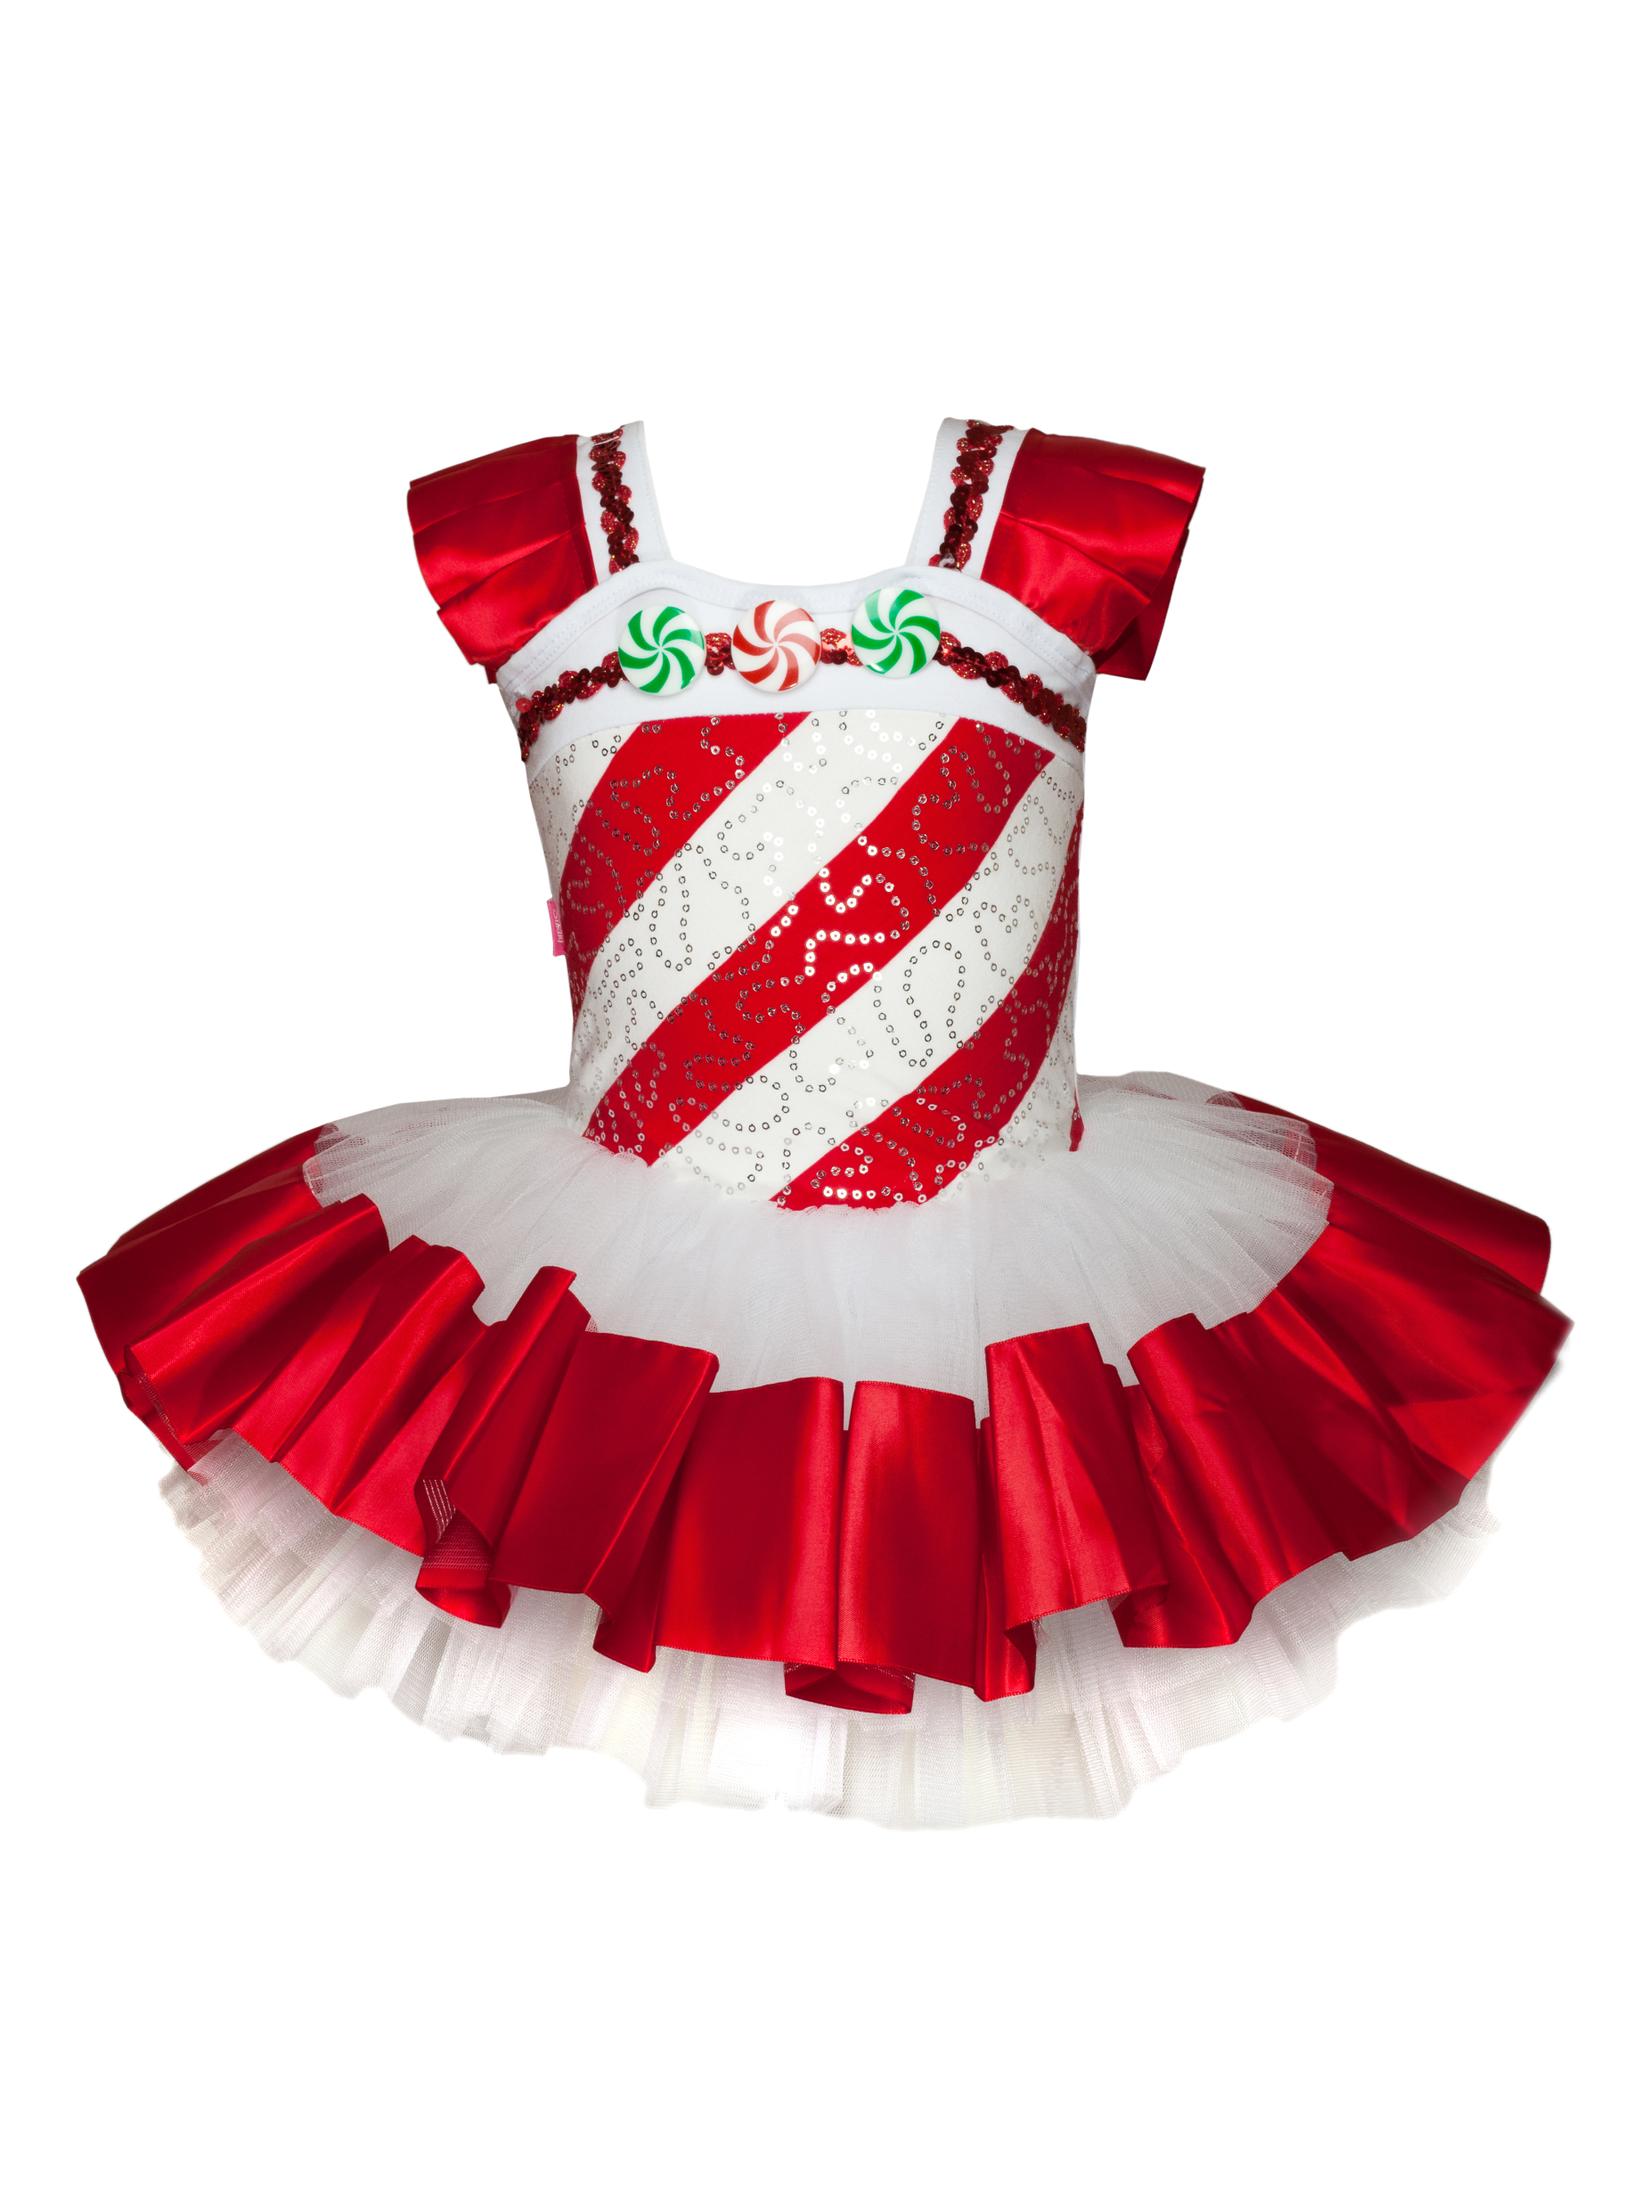 Selected image for GALA UNIQ Haljina za balet za devojčice 1171 crvena